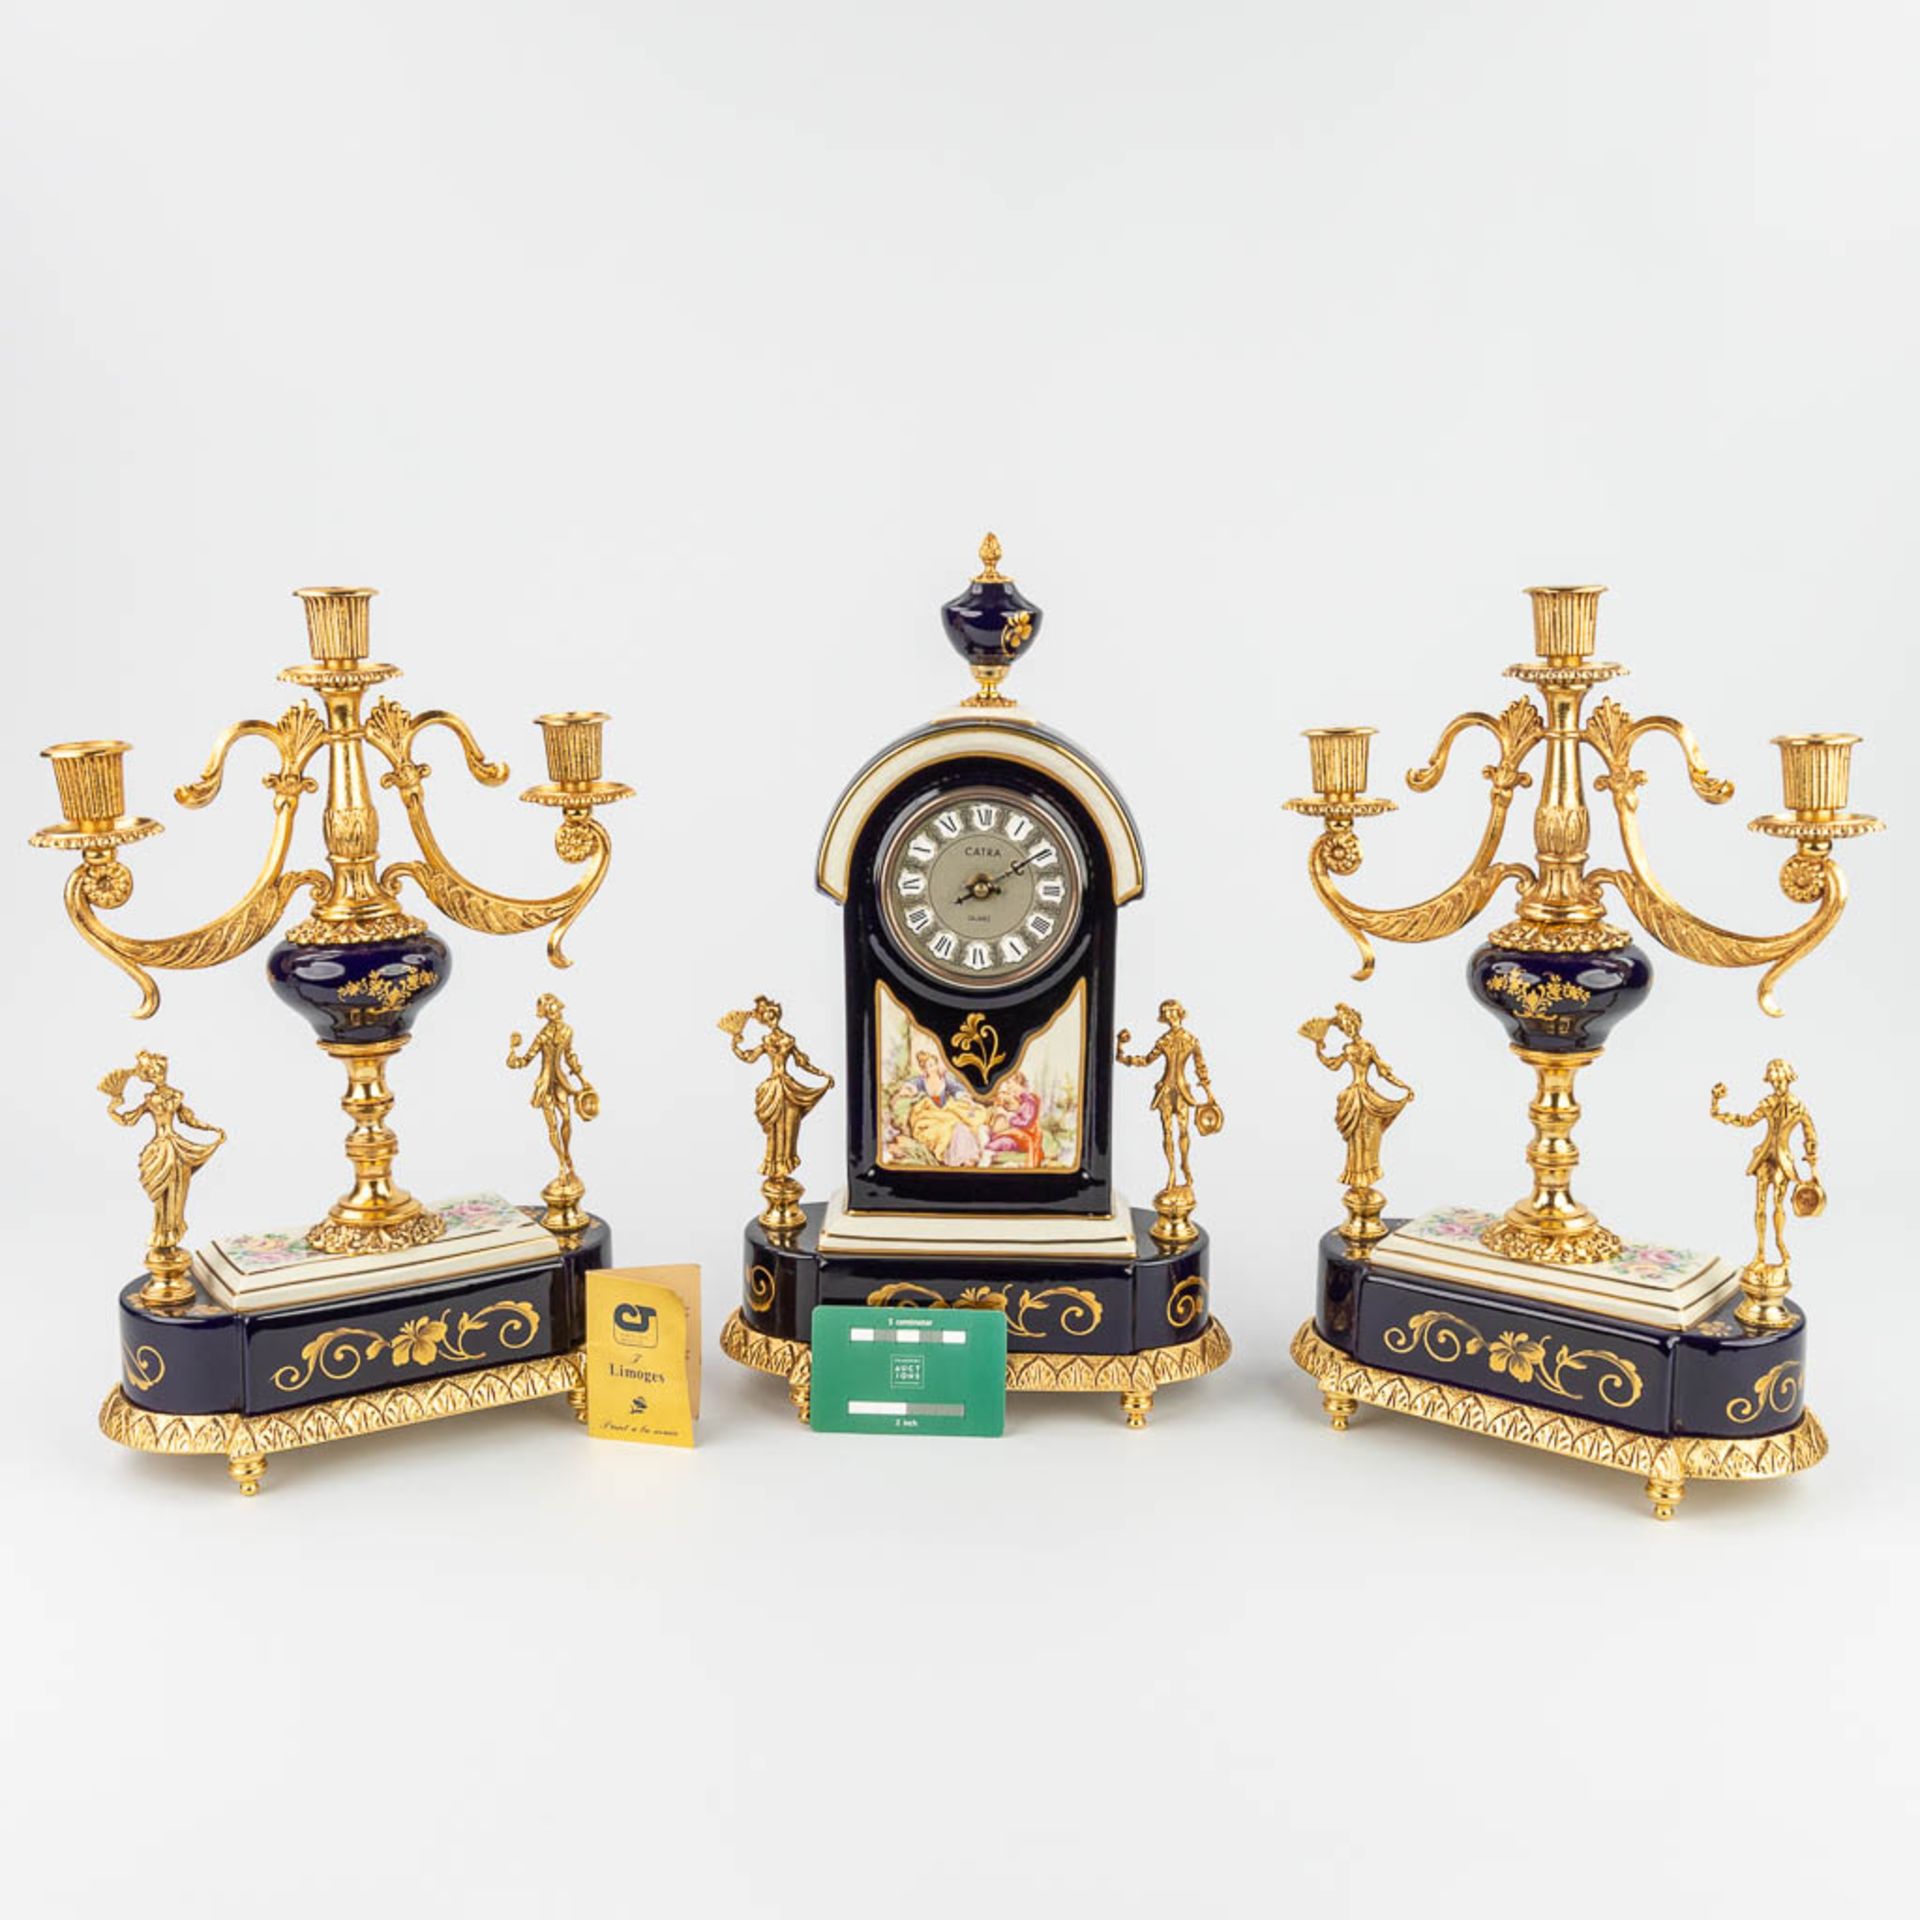 Limoges, a three-piece mantle garniture clock and candelabra, Campostrini e trallori (12 x 23 x 40cm - Image 3 of 17